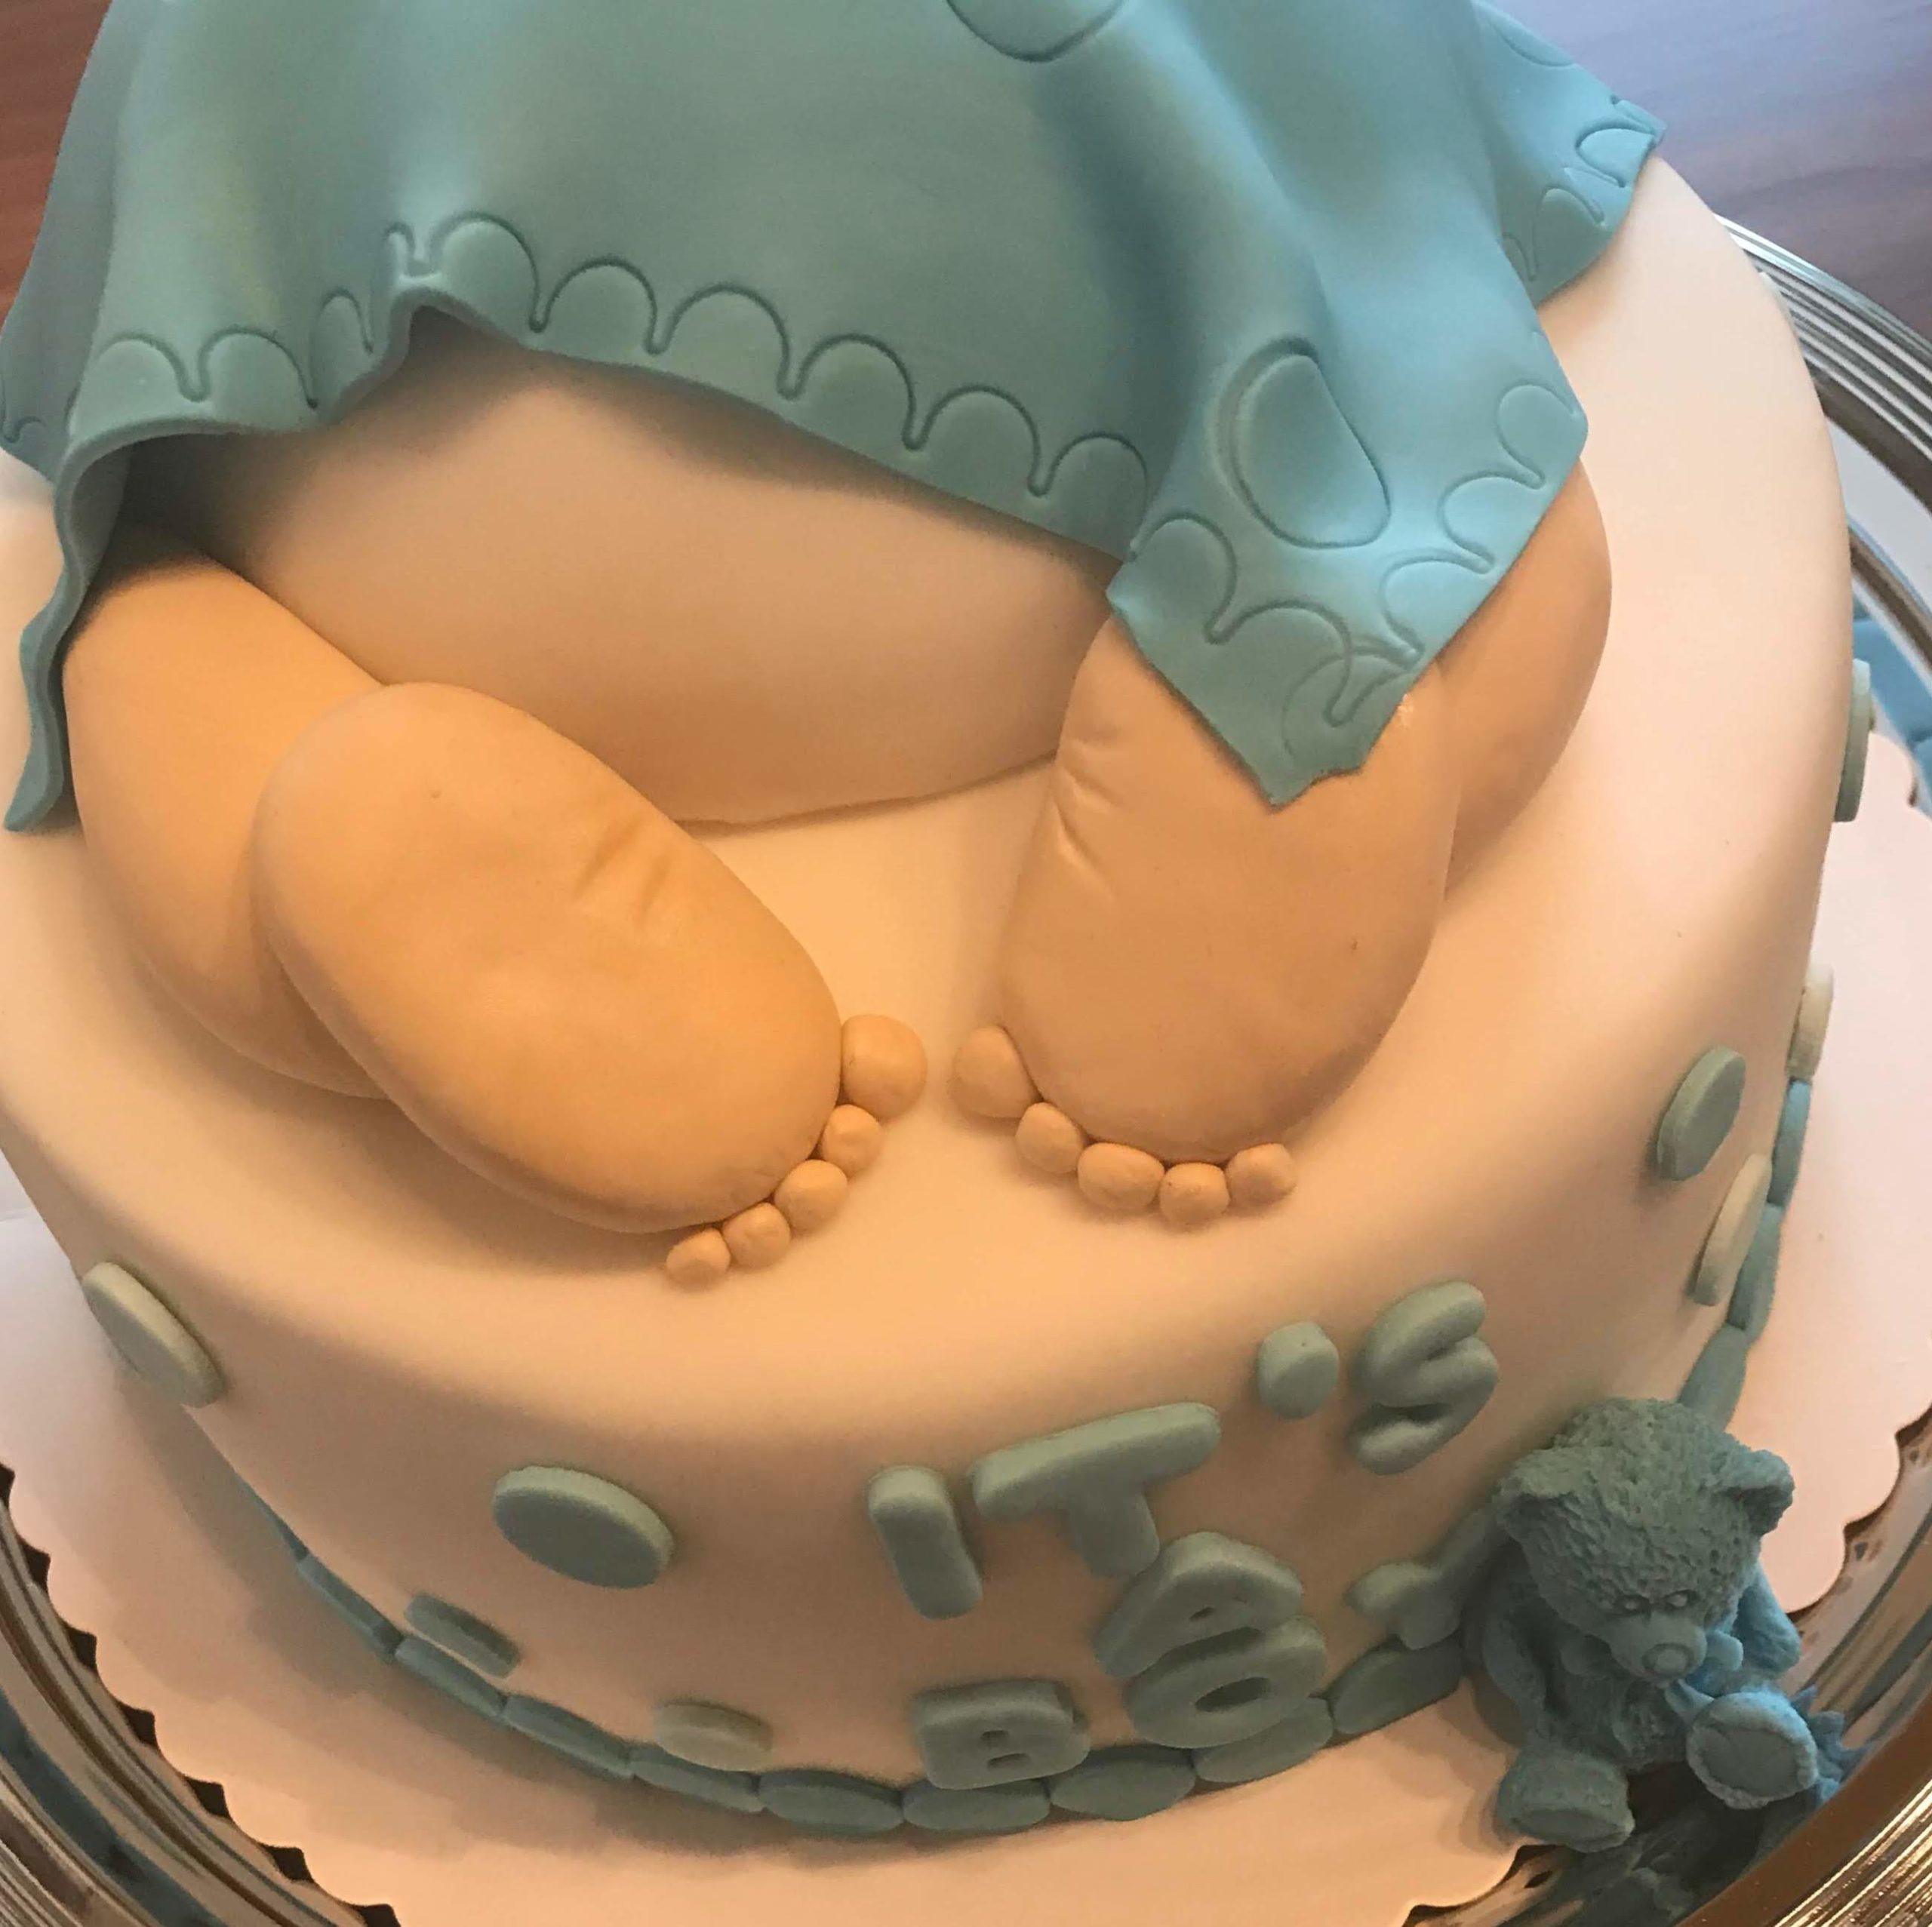 Baby Torte